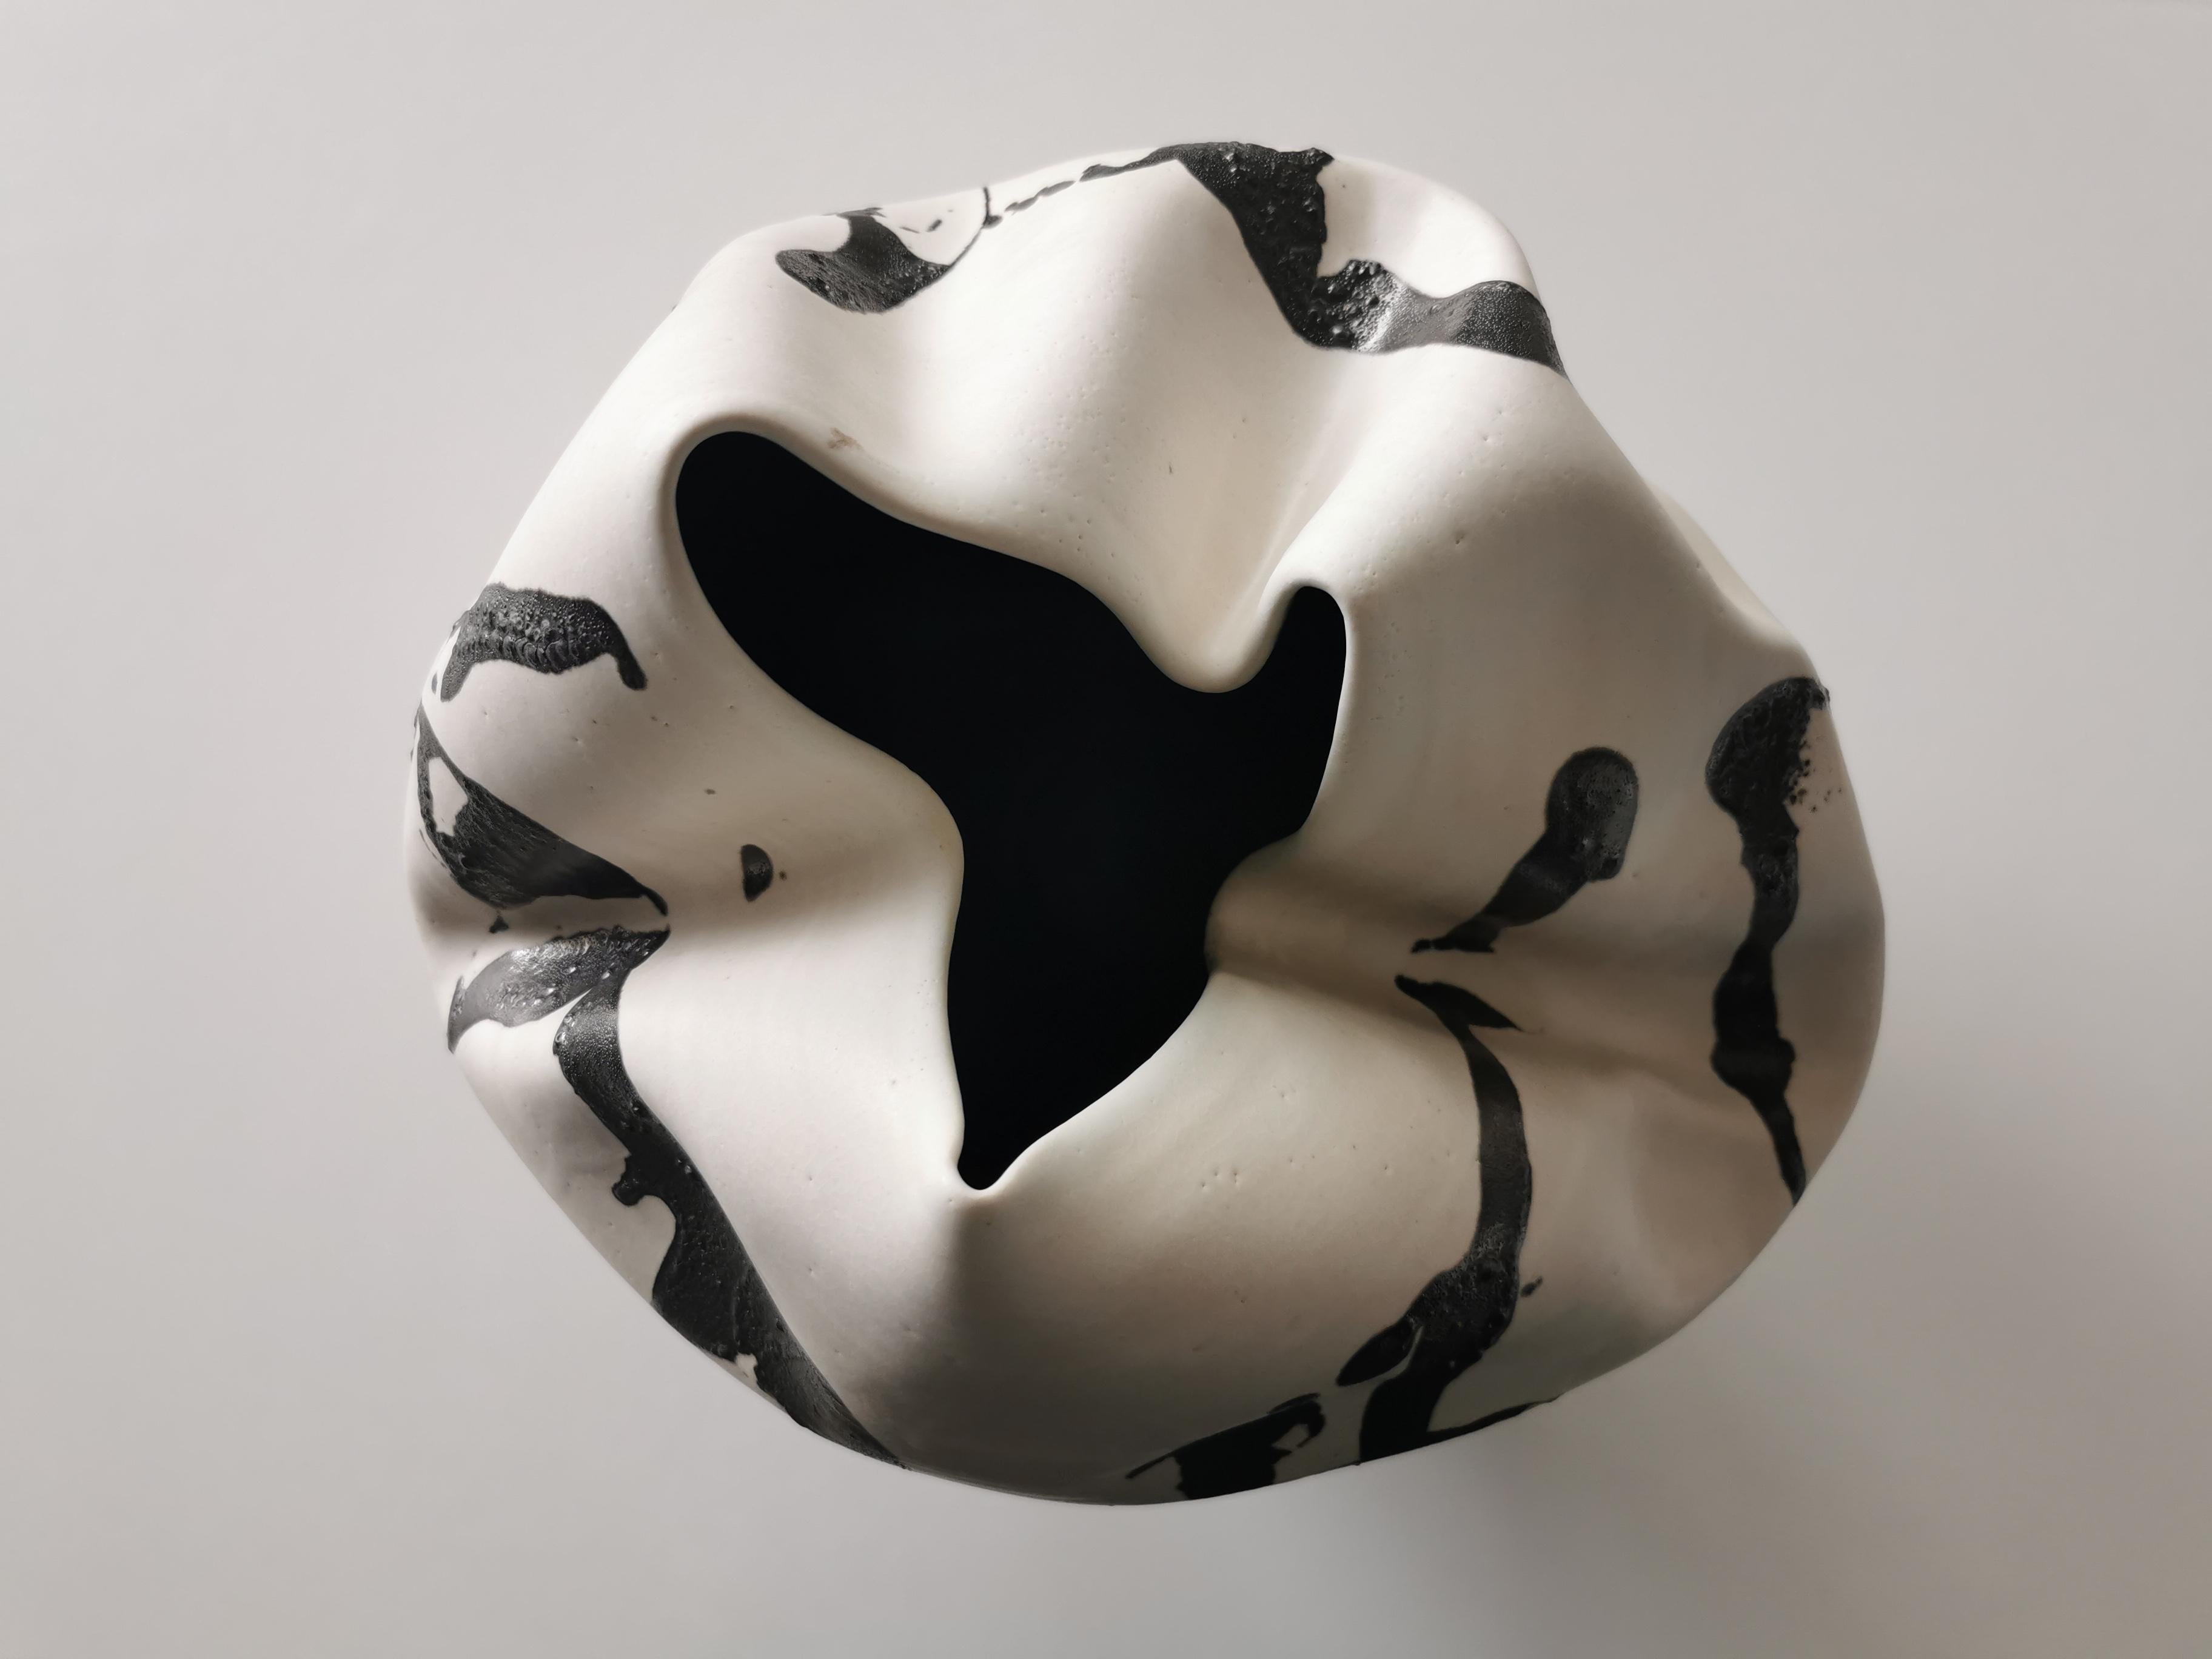 White Undulating Form Expressive Markings, Unique Ceramic Sculpture Vessel N.79 2